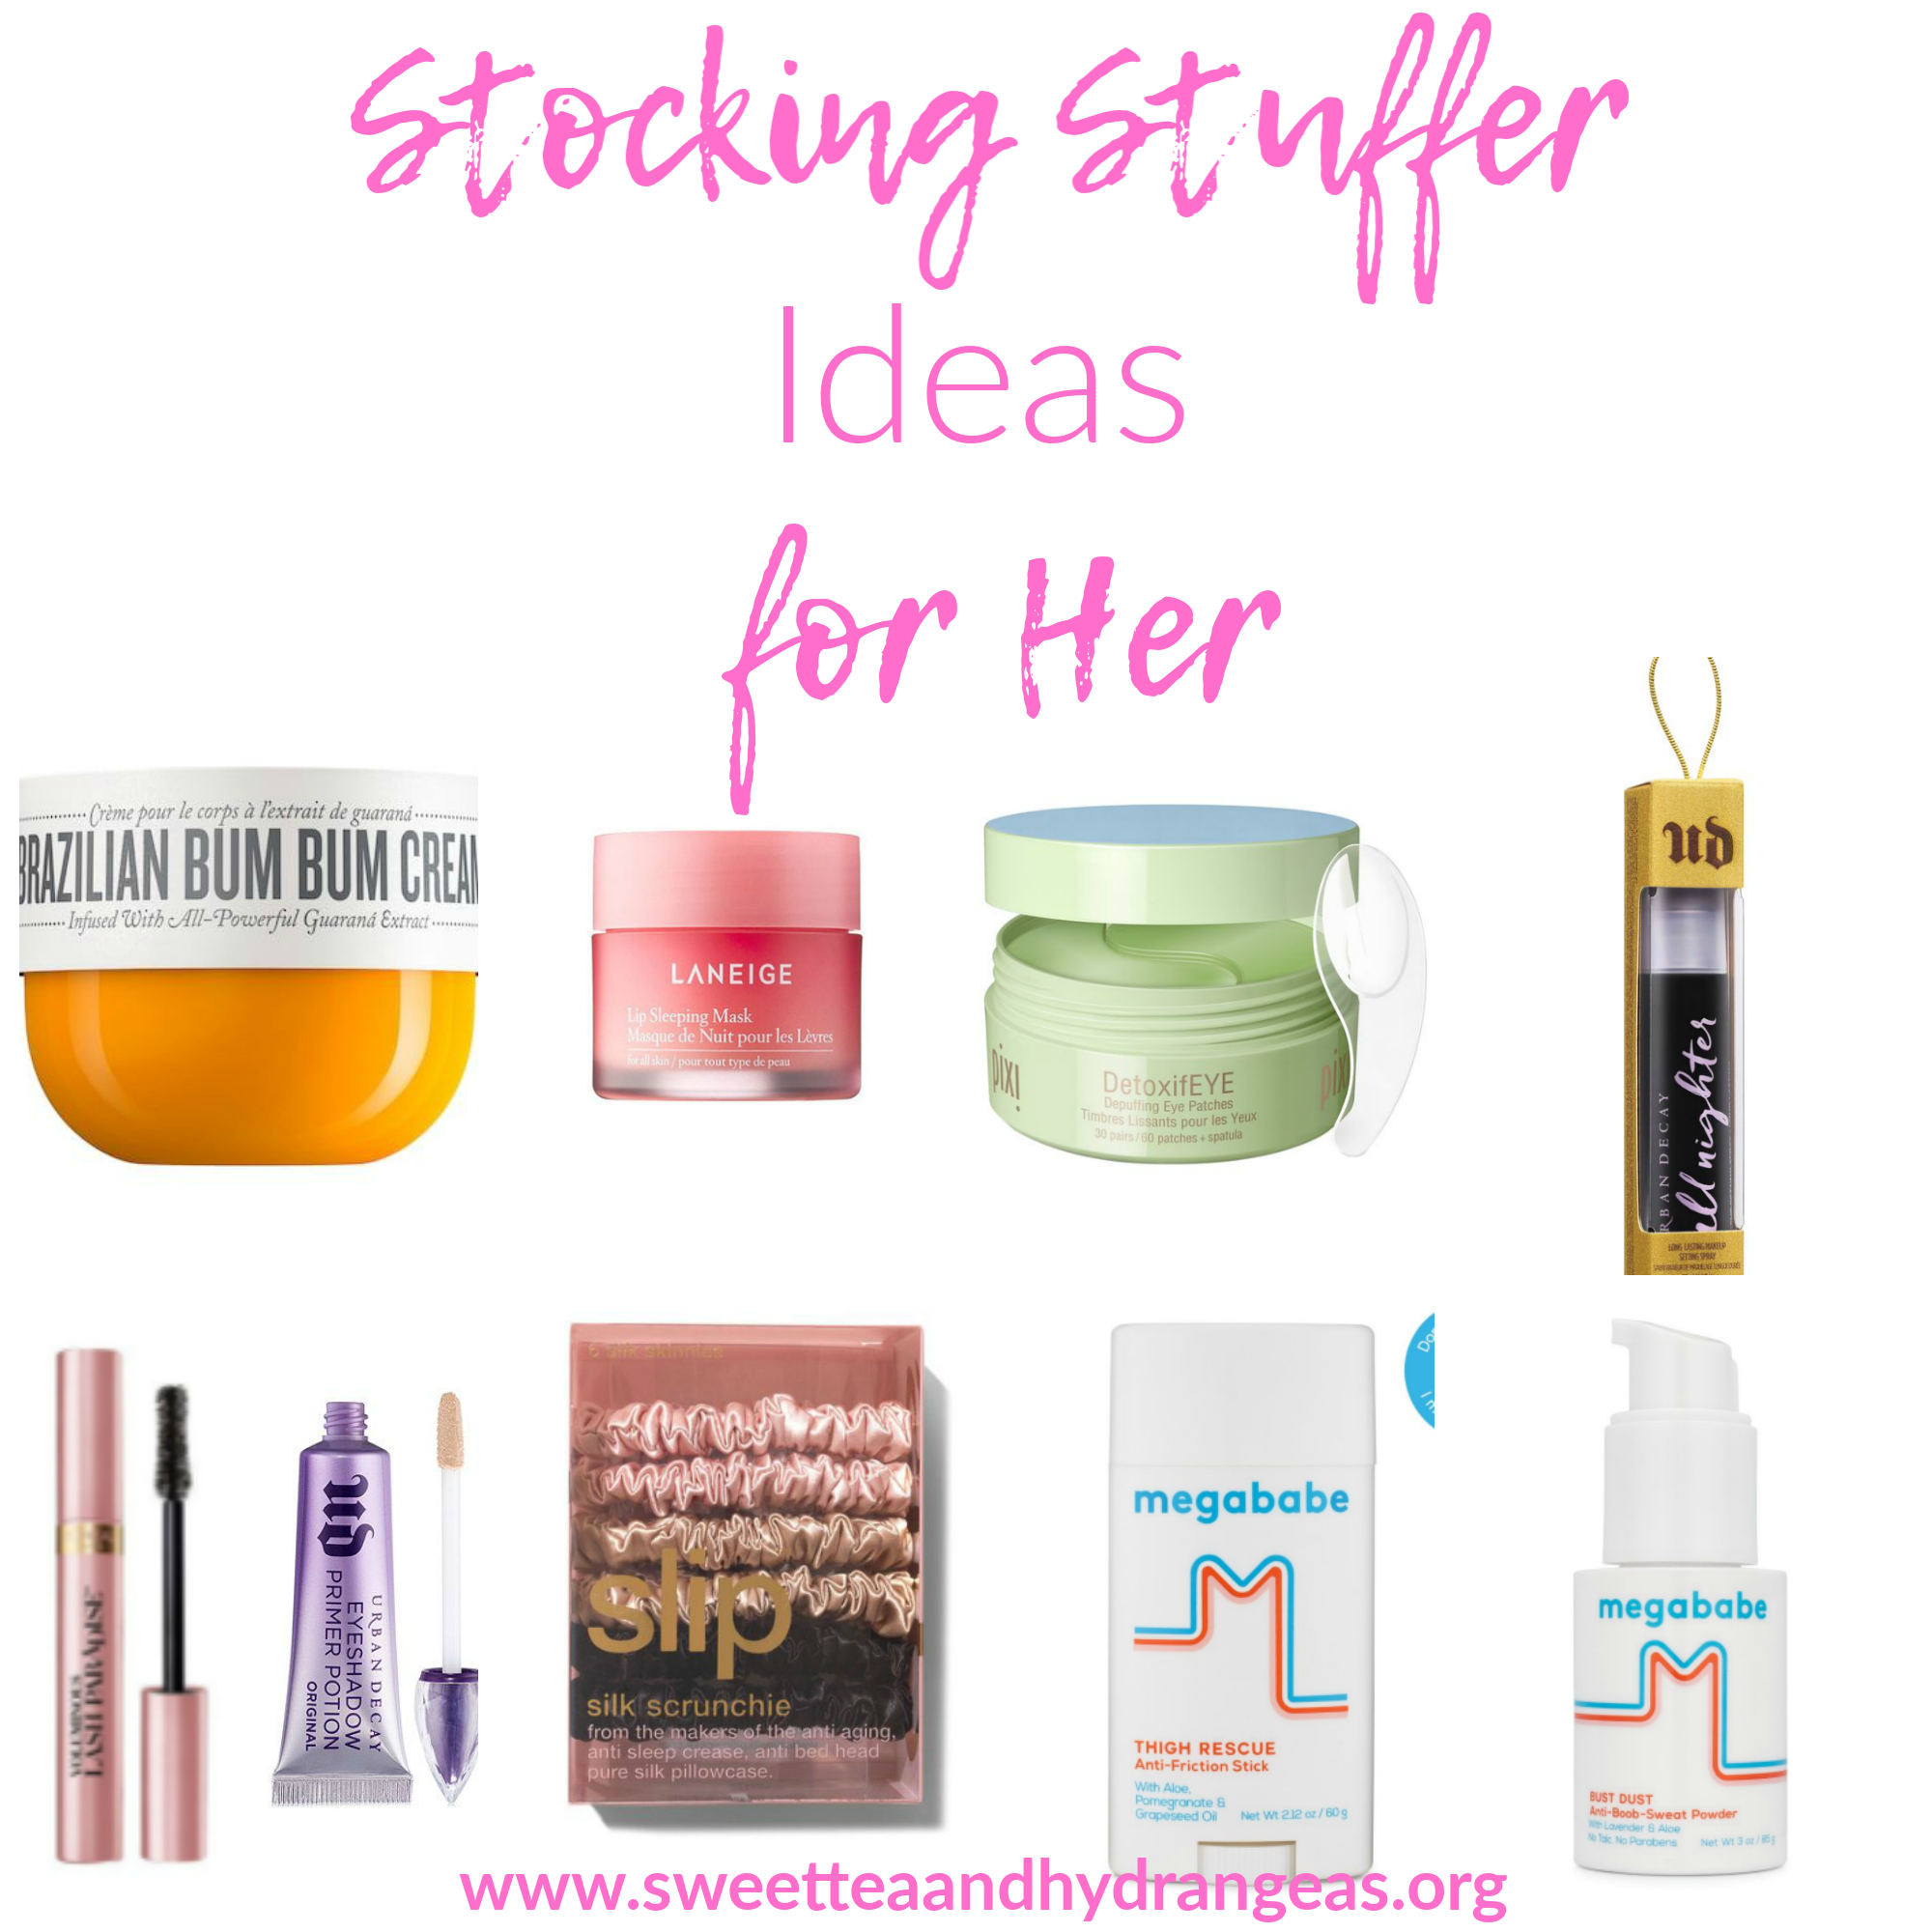 Sweet Tea & Hydrangeas Stocking Stuffer Ideas for Her